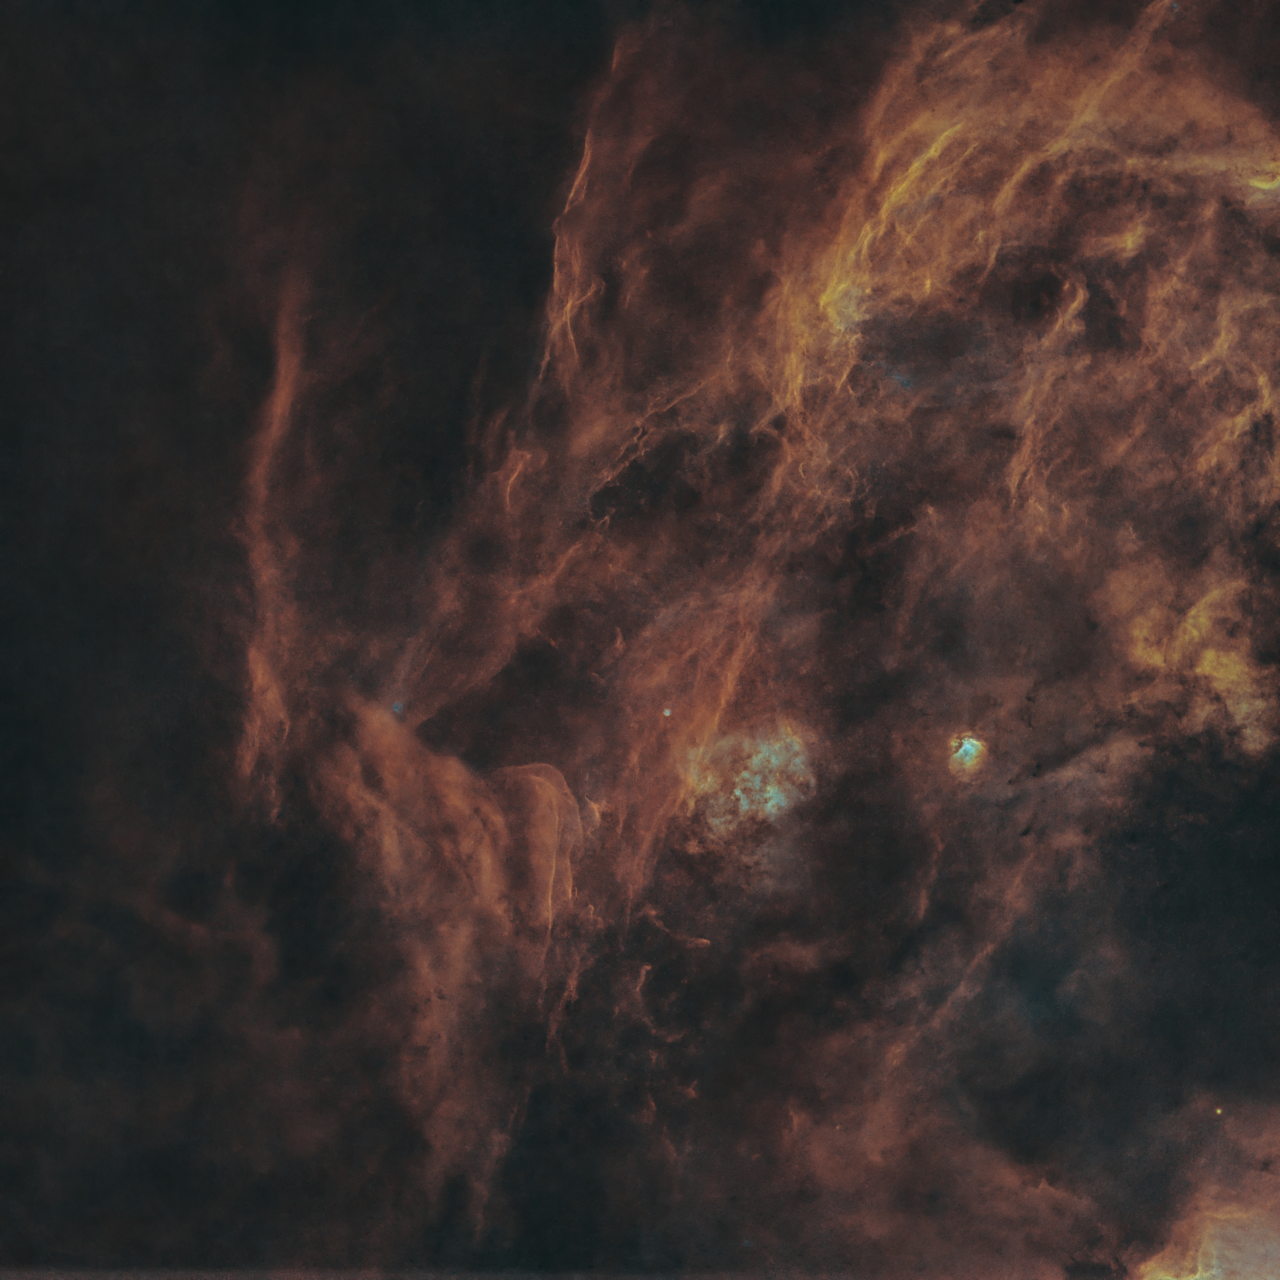 Cygnus near Sh2-115 SHORGBStars Sii 43x360s Sii 5x900s Ha 31x360s Oiii 84x360s R 21x180s G 24x180s ESD B 28x180s Draft2b Starless jpg